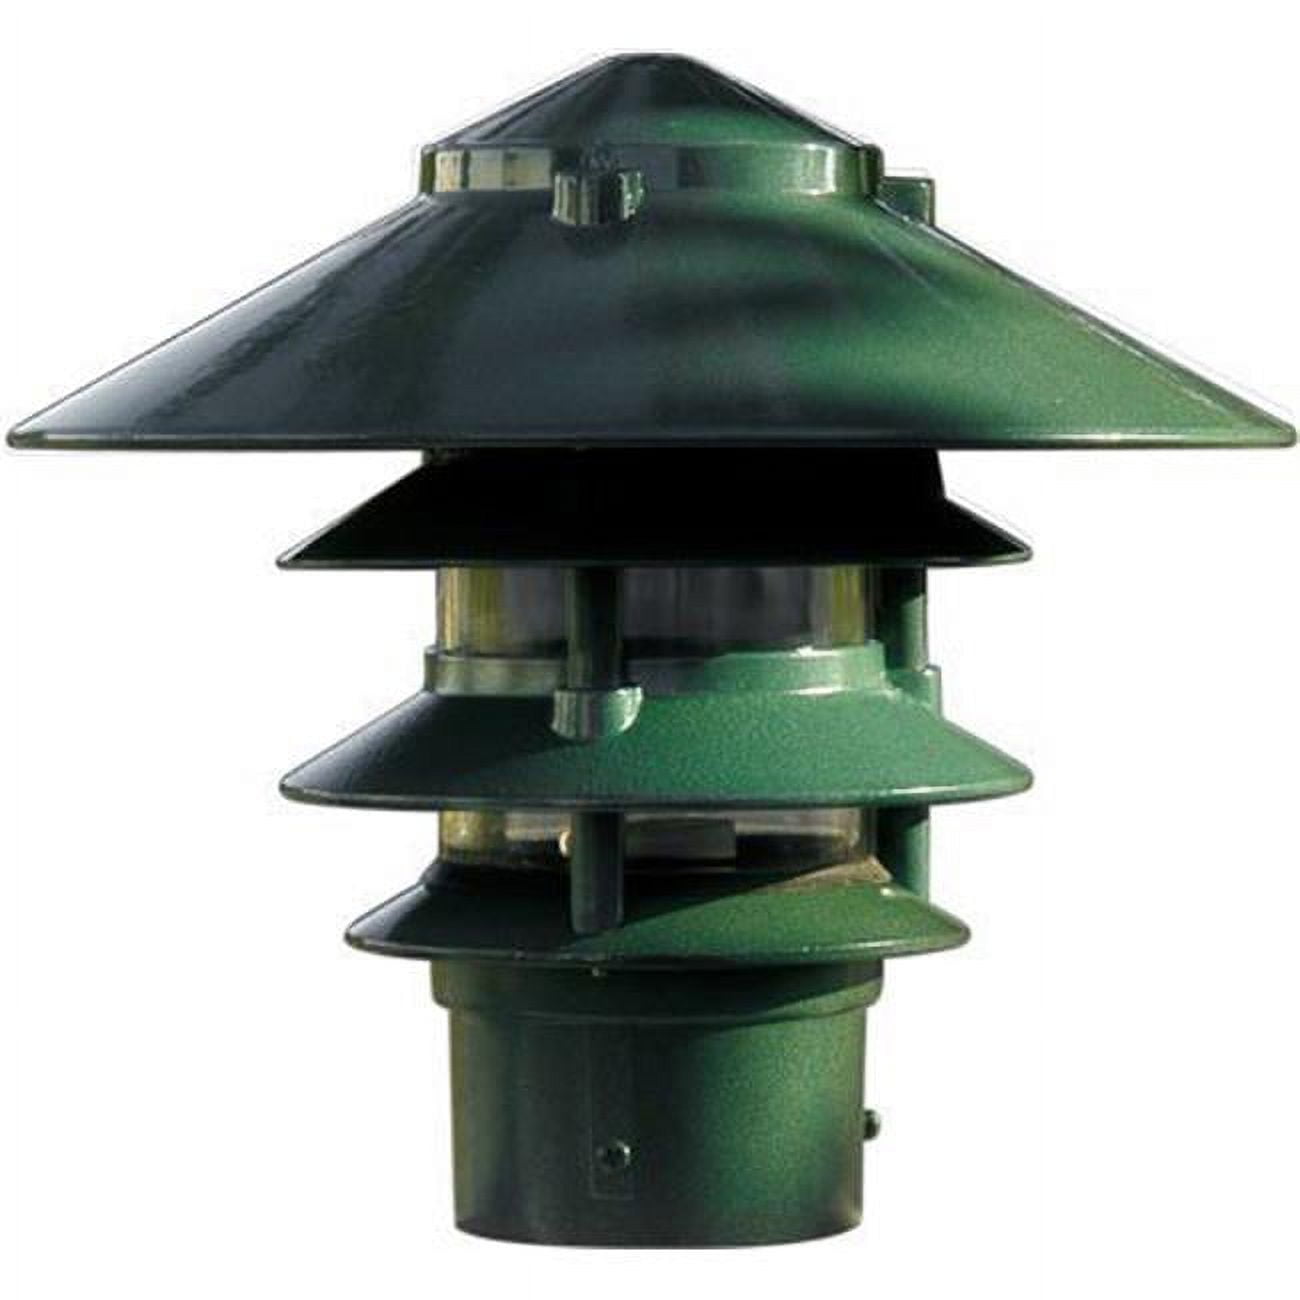 0.5 In. Four Tier Pagoda Light - 7w 120v, Green